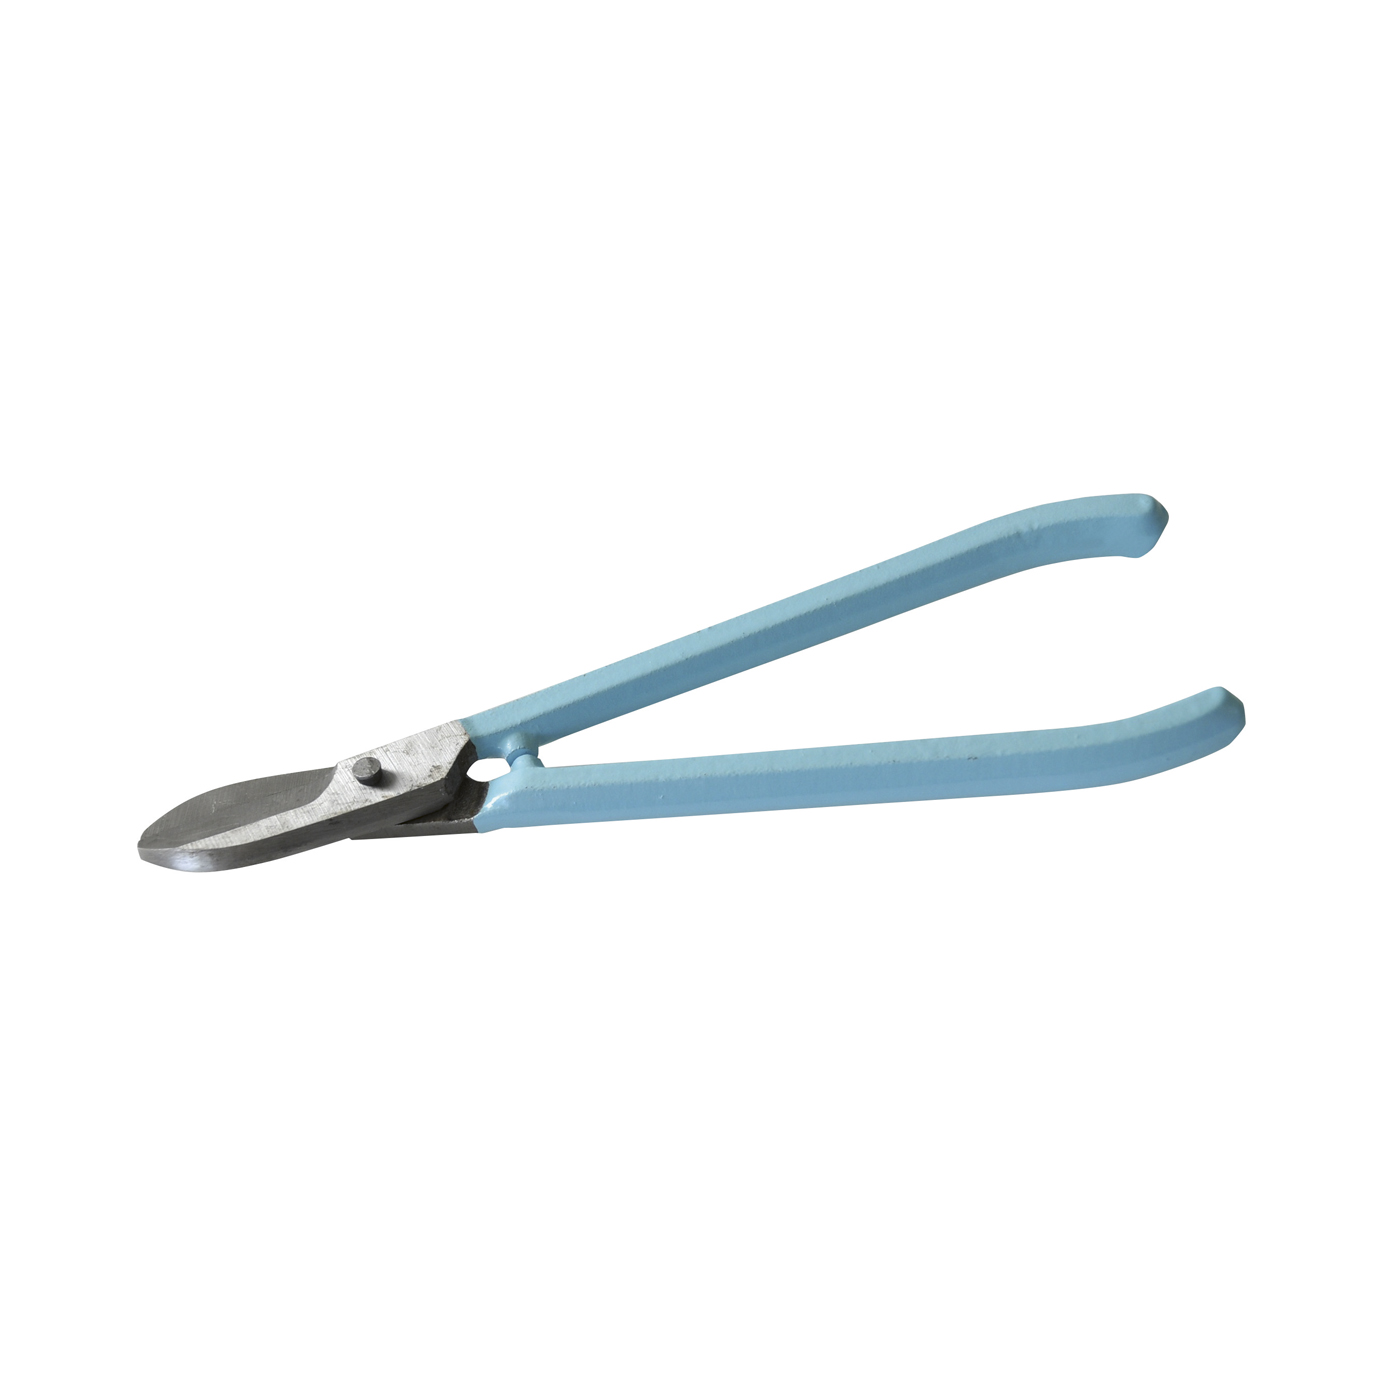 Juweller Scissors, 180 mm, Straight Edges - 1 piece